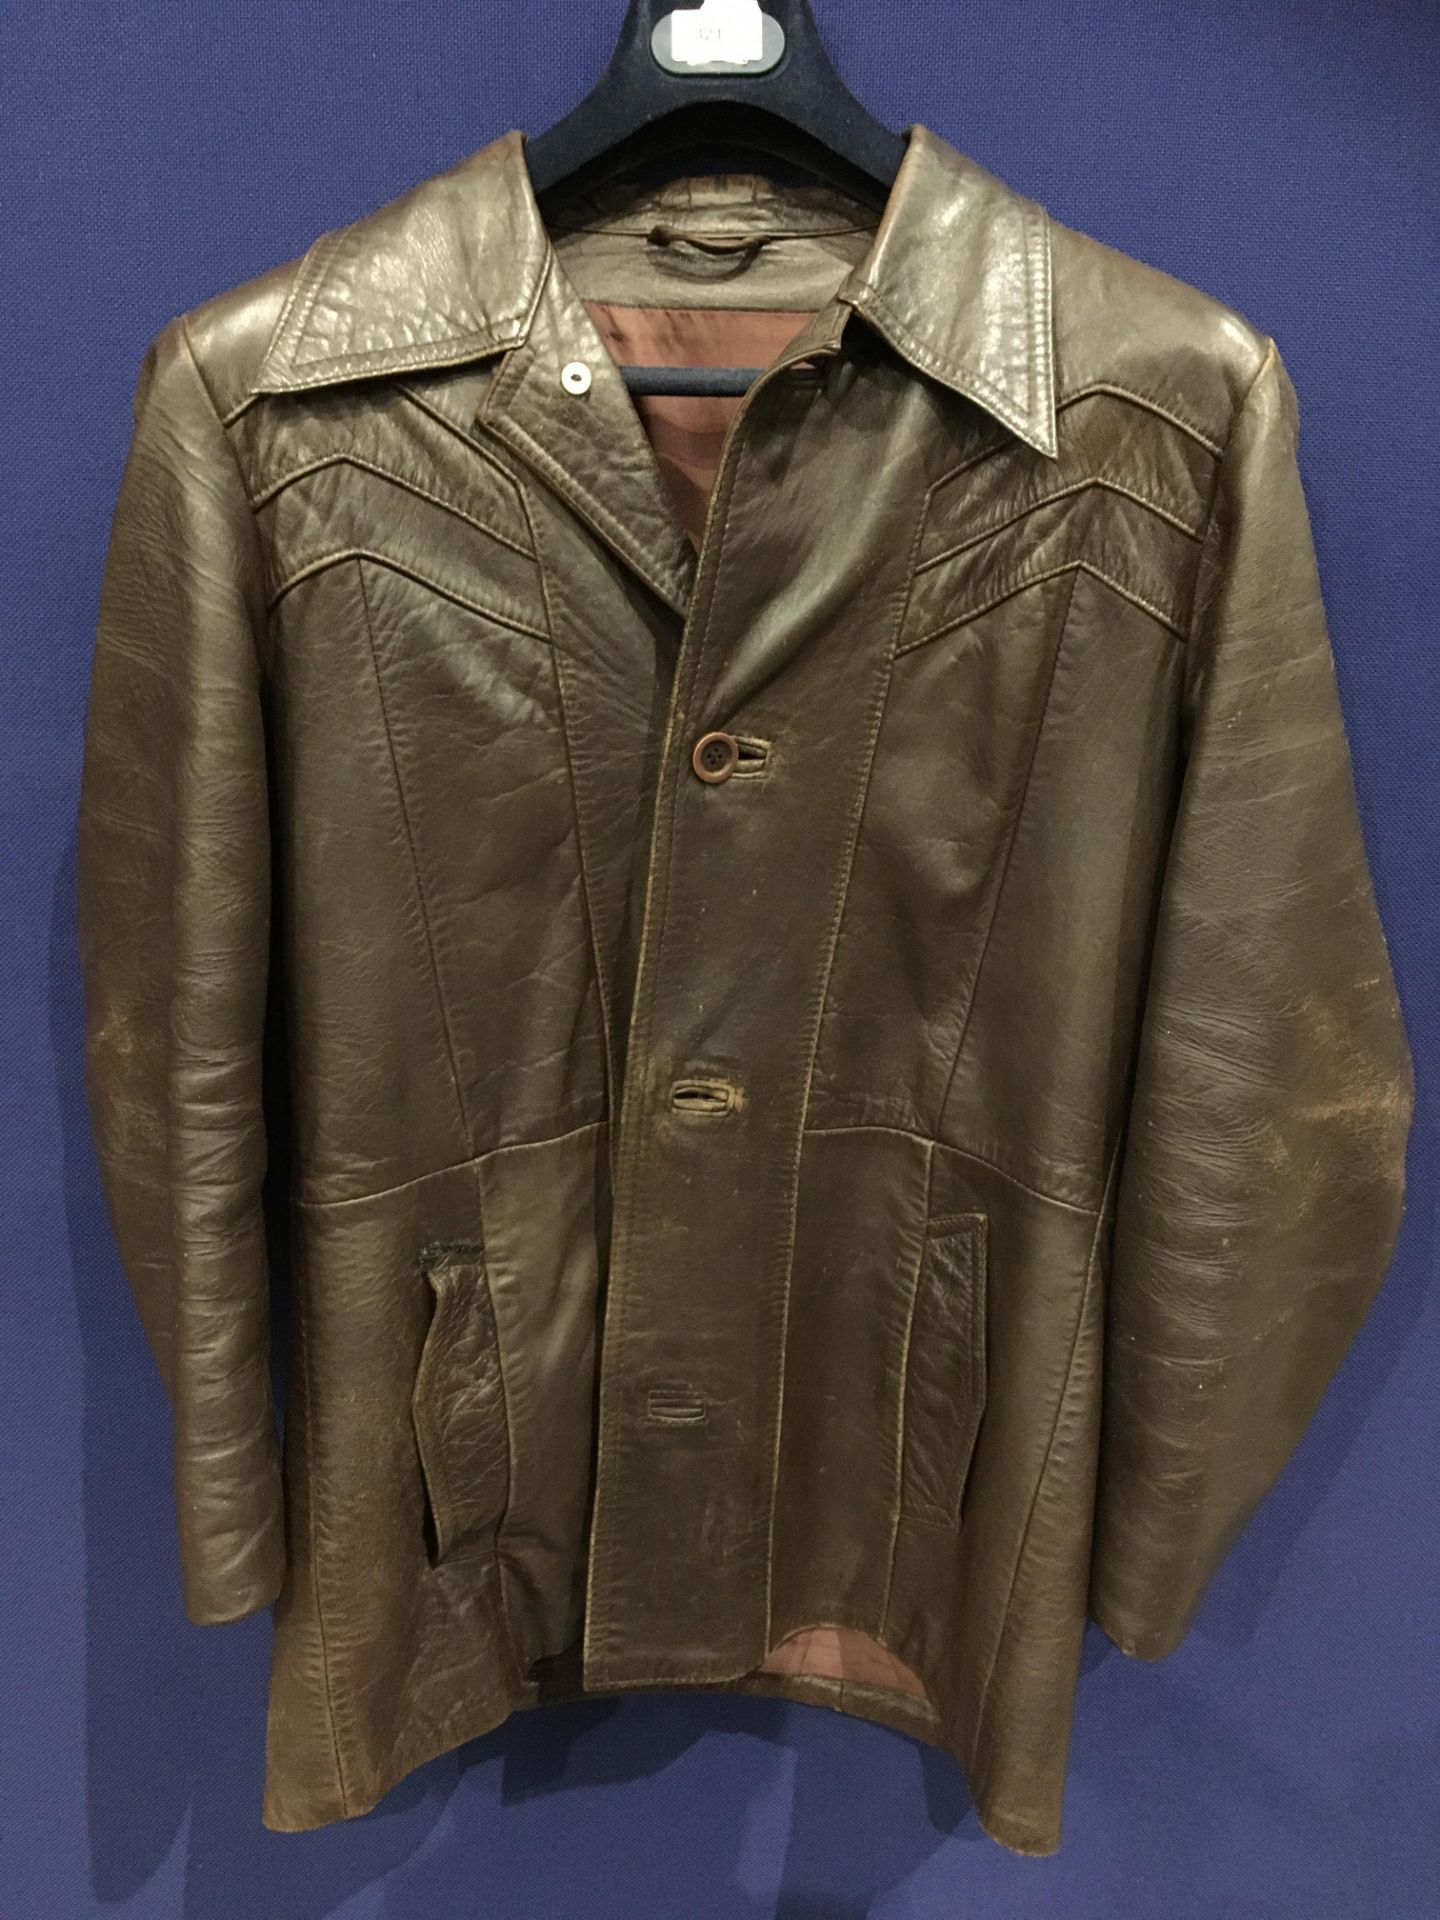 A Glenhusky of Scotland gents brown leather jacket - no size shown